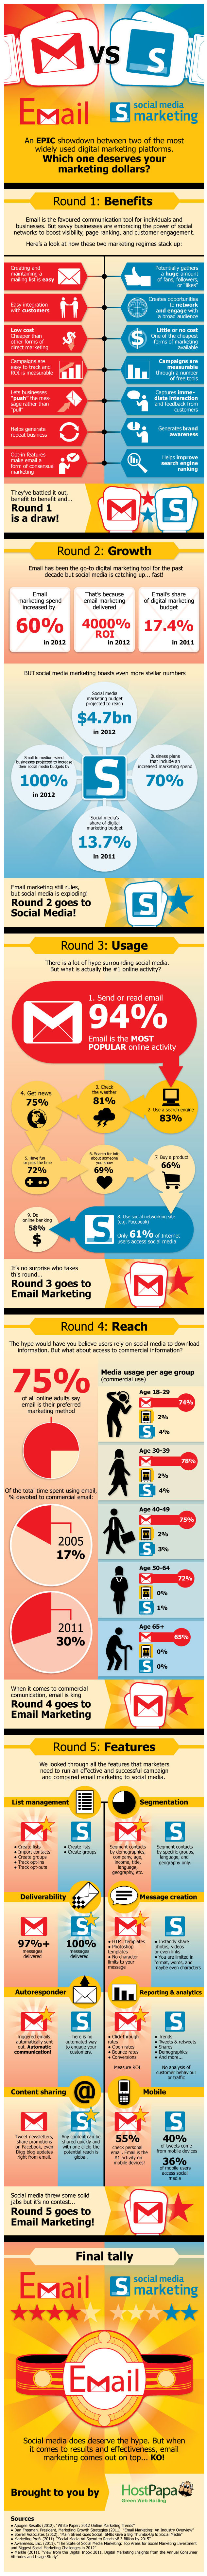 Email Marketing y Social Media